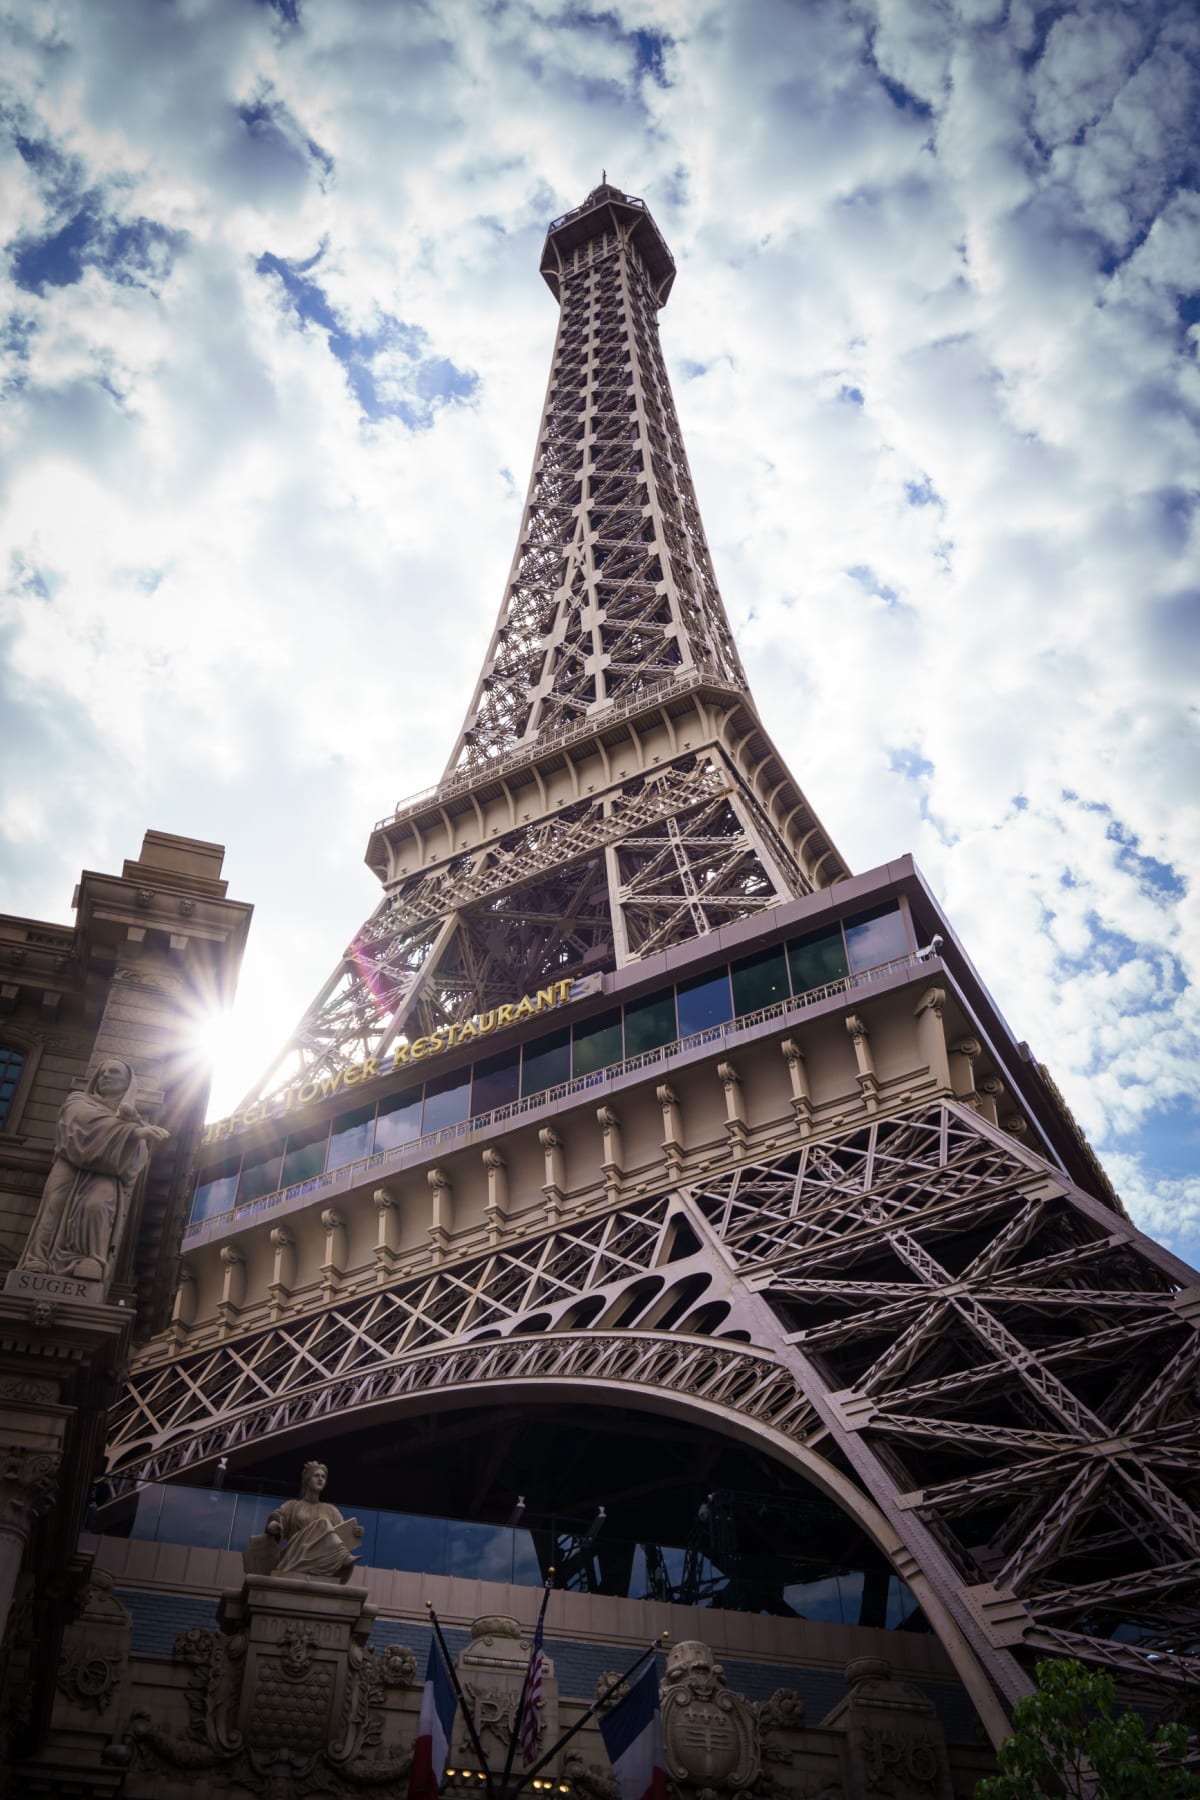 A replica of the Eiffel Tower in Las Vegas